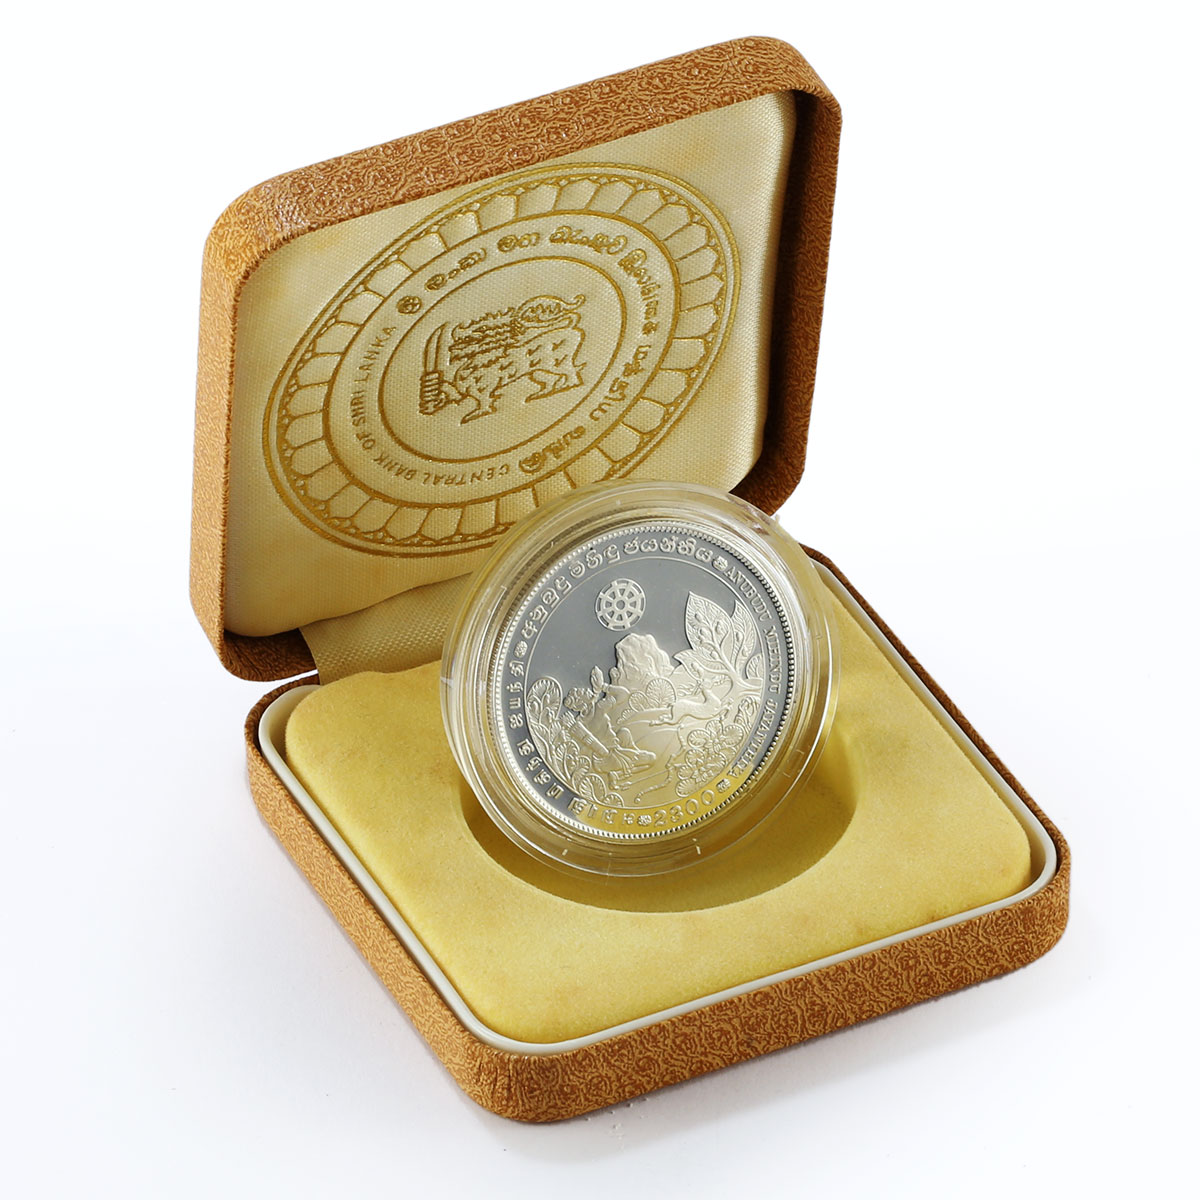 Sri Lanka 500 rupees Praying Figure Buddha's Teachings Silver Proof Coin 1993